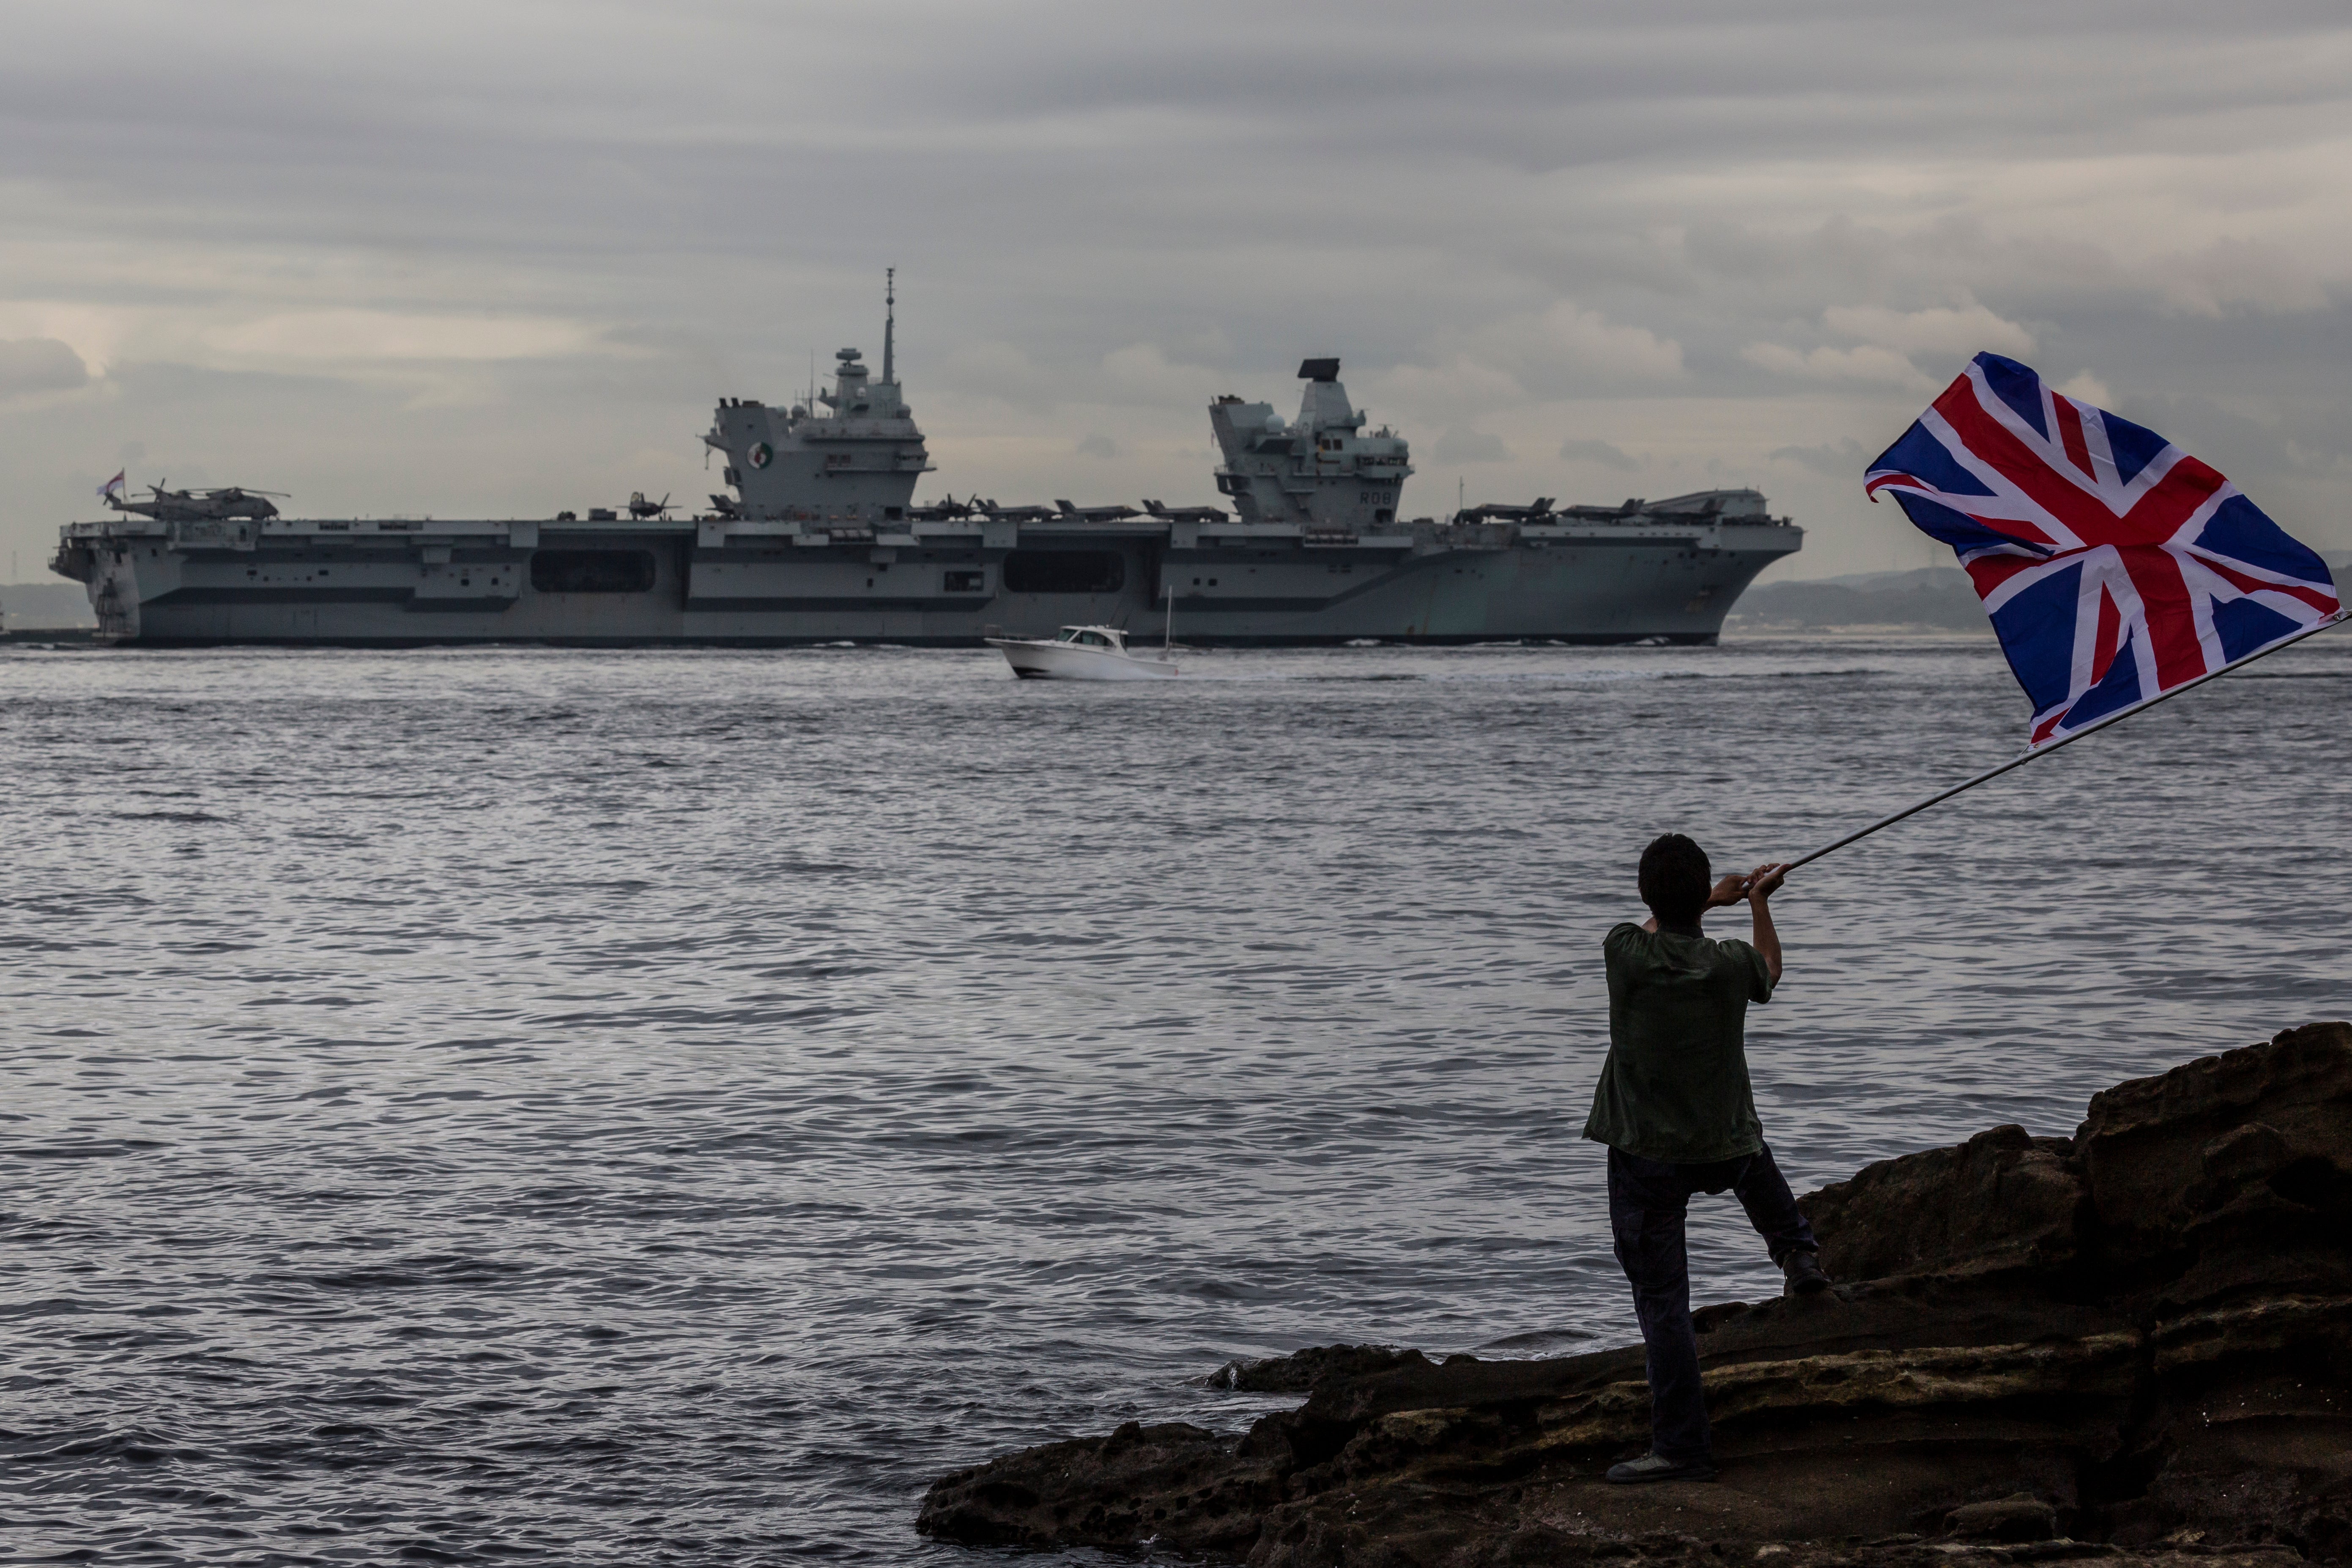 The British Royal Navy aircraft carrier HMS Queen Elizabeth